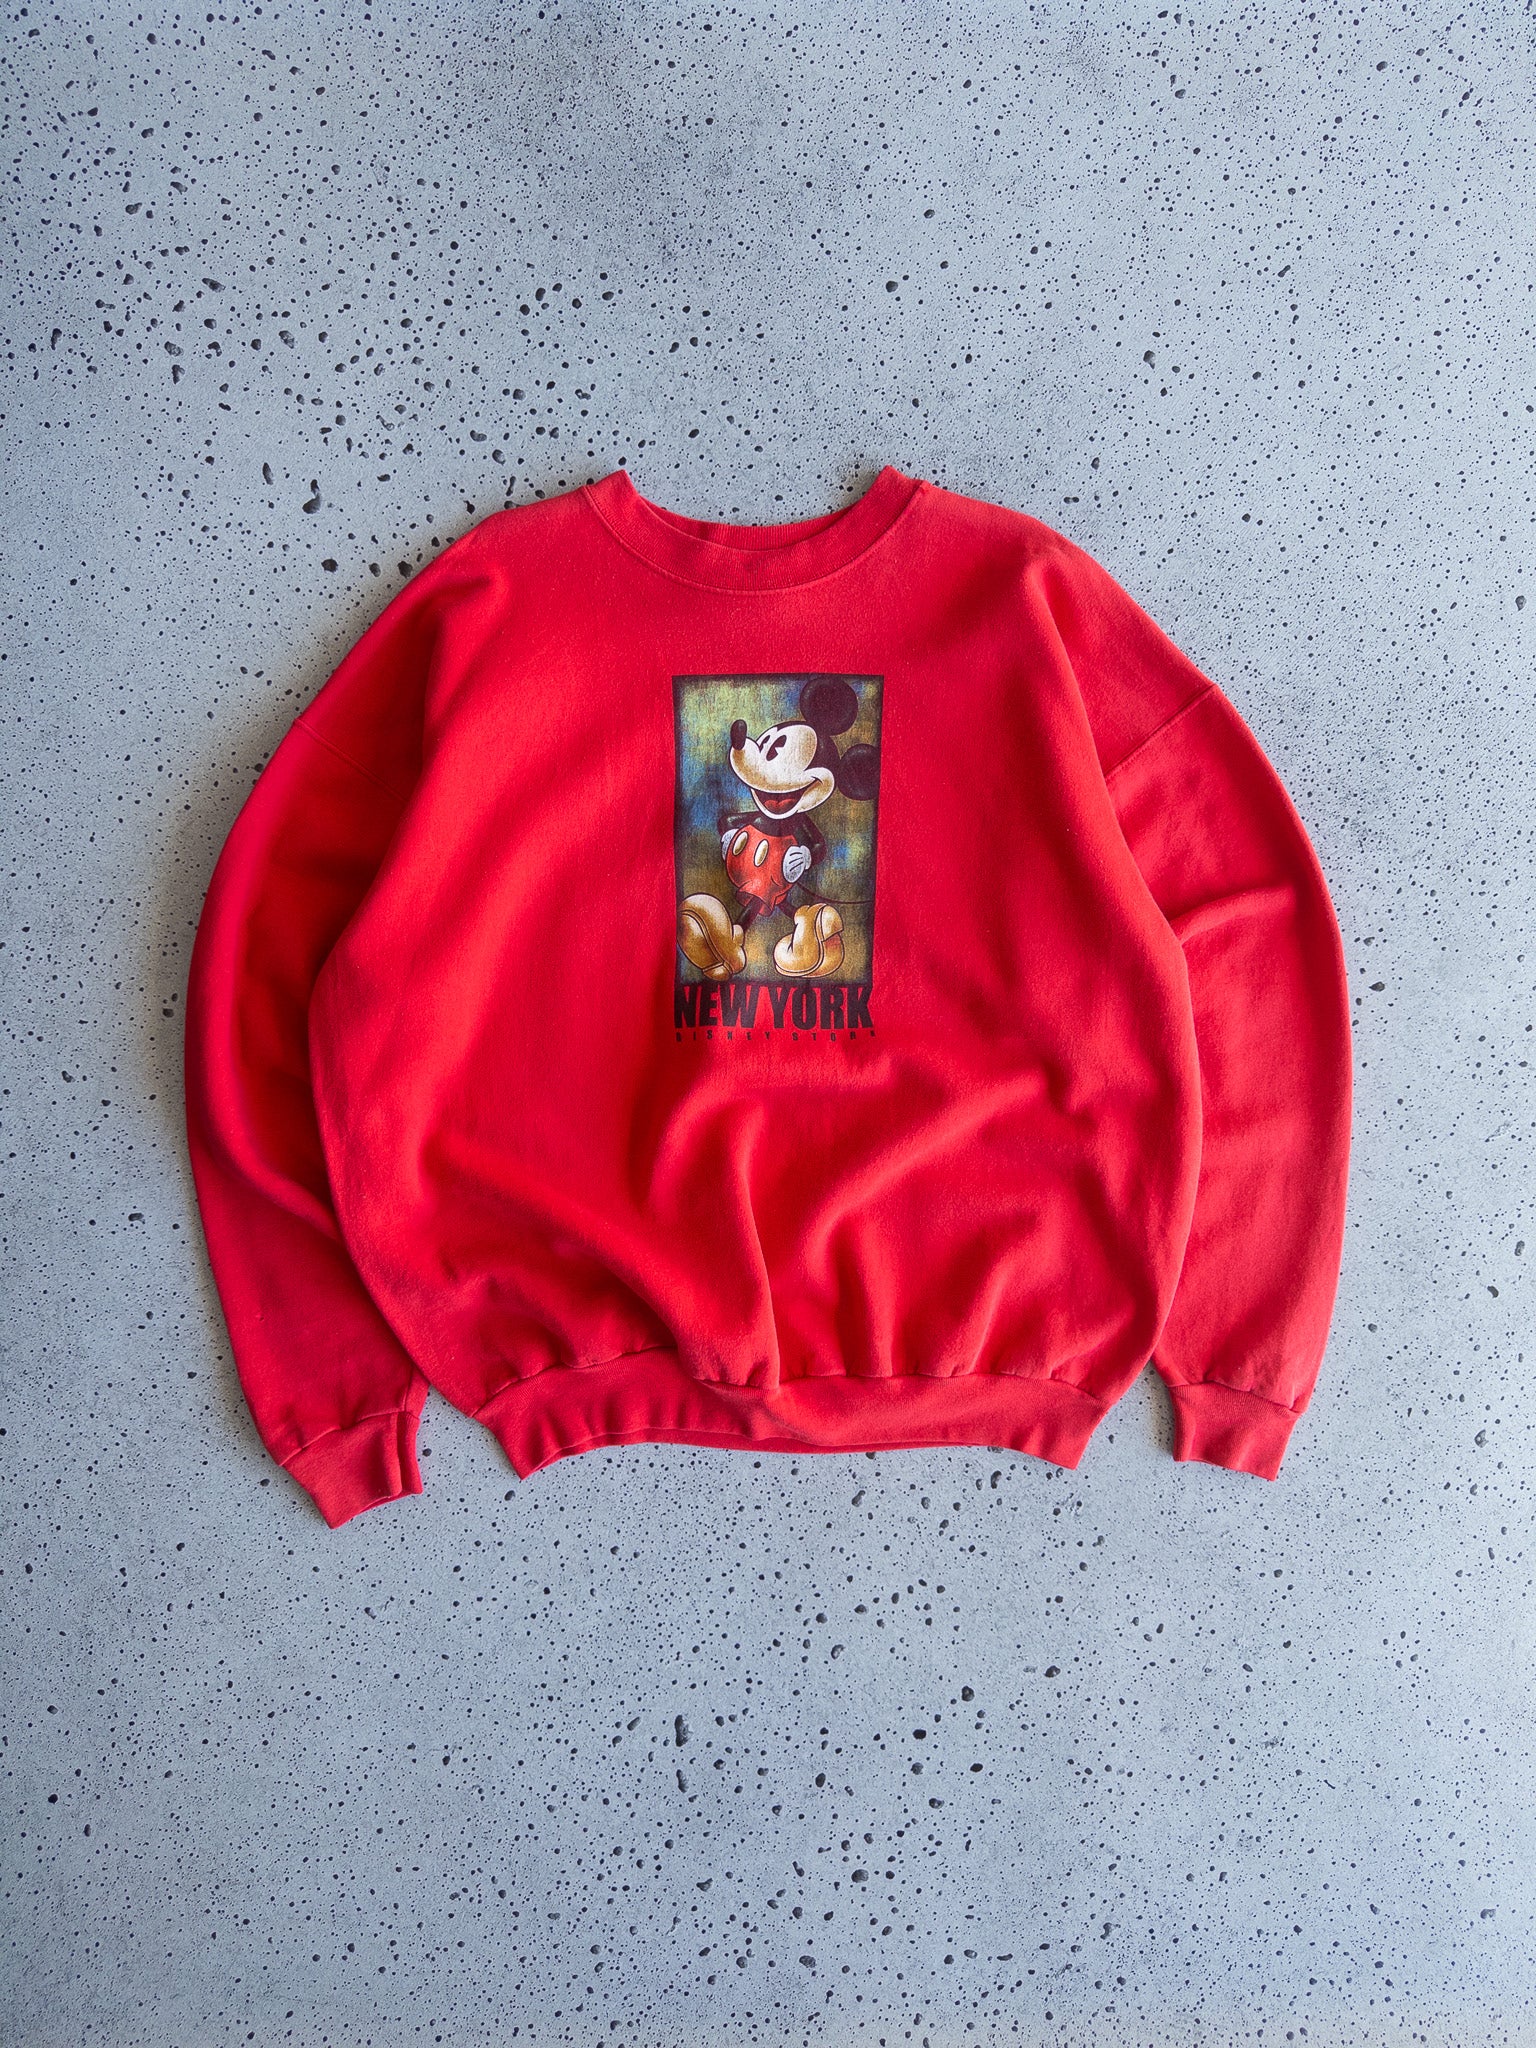 Vintage Mickey Mouse New York Sweatshirt (XL)